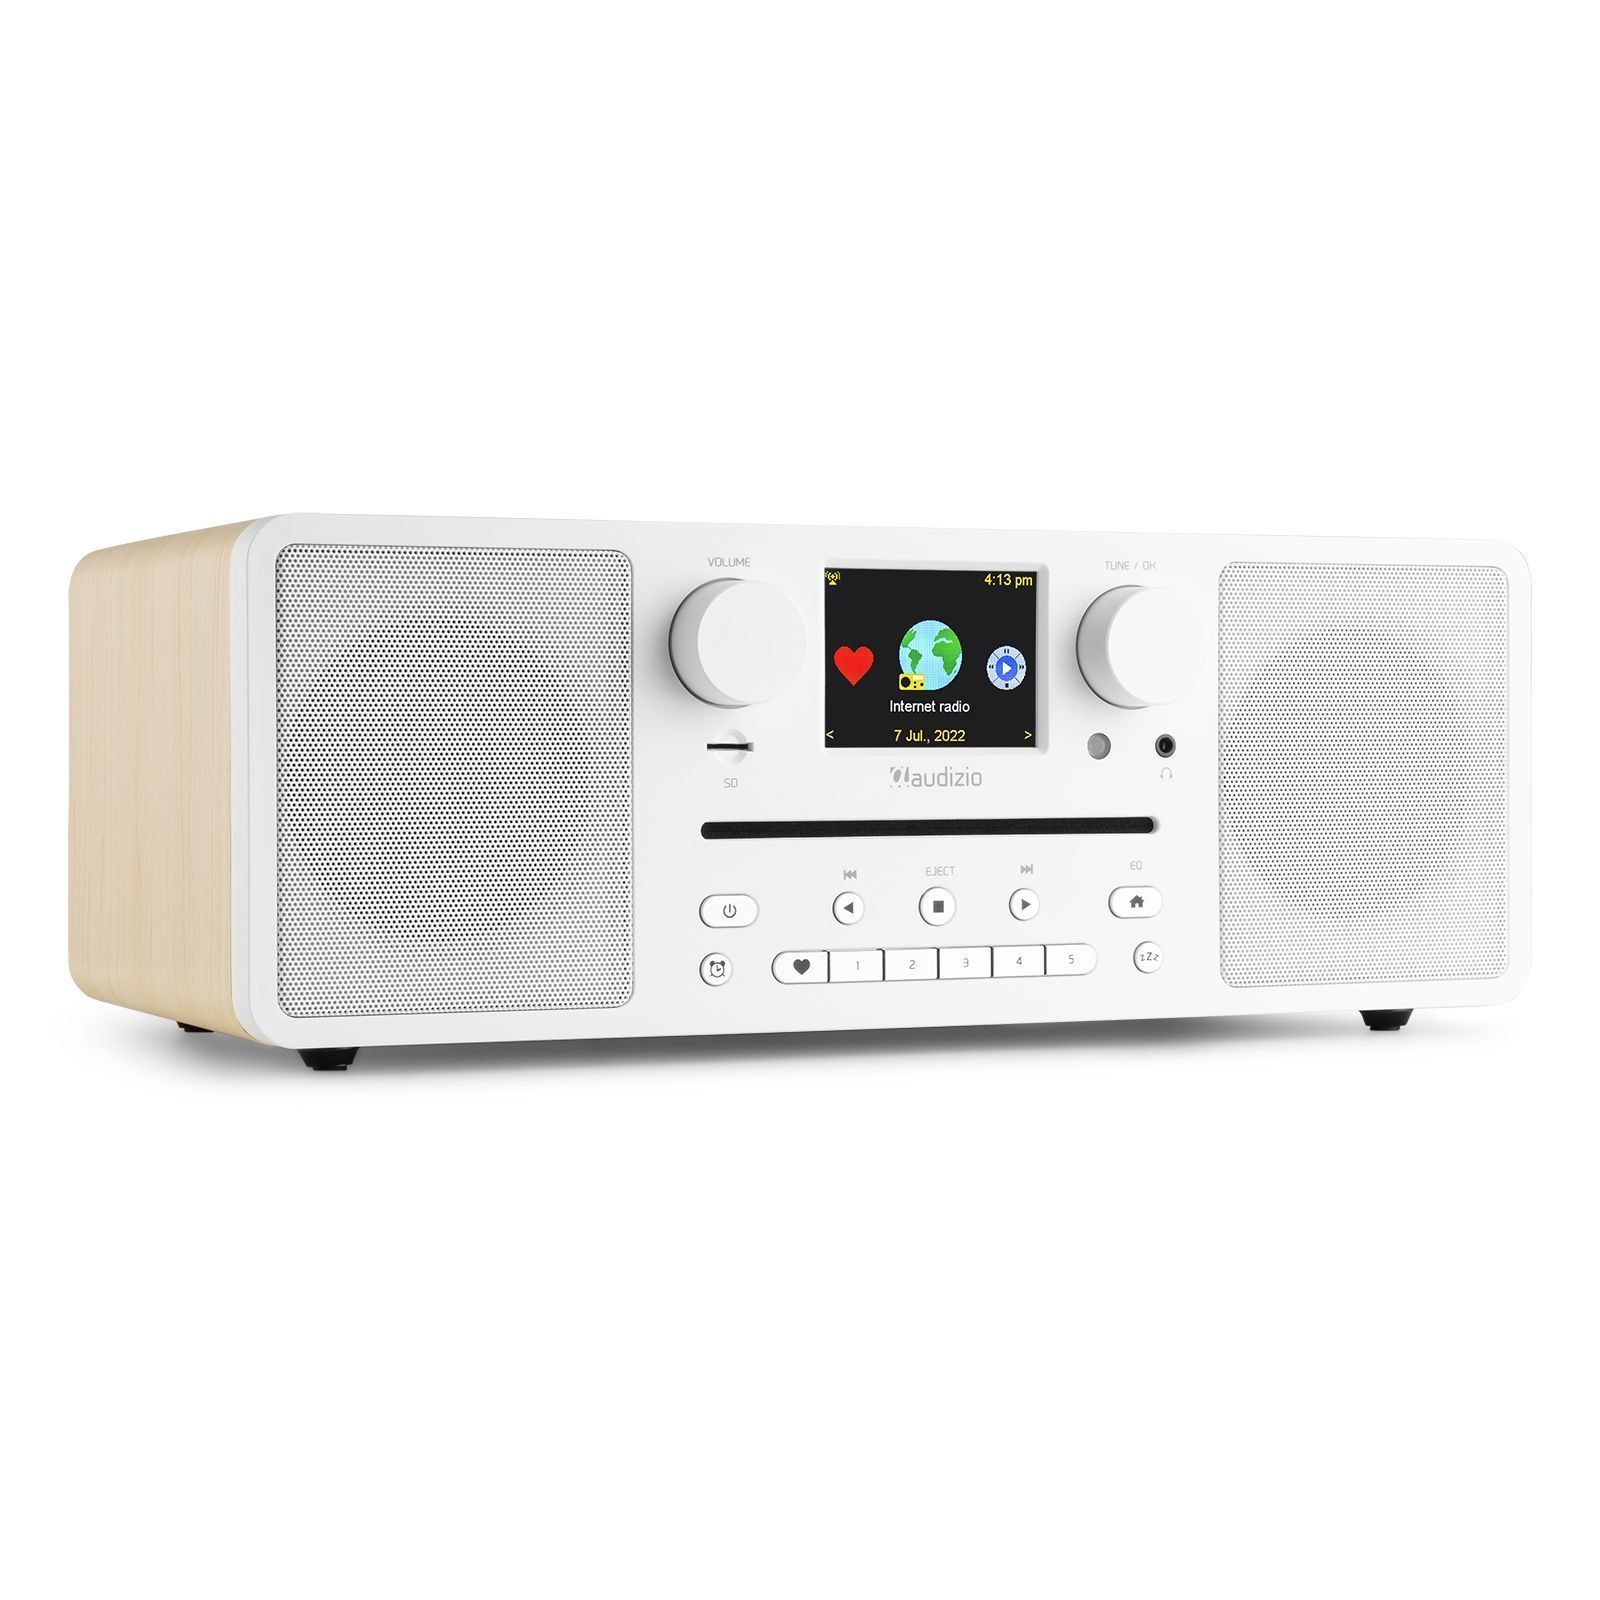 Audizio Naples stereo DAB met CD speler, Bluetooth, FM en internetradio - 60W - Wit kopen?